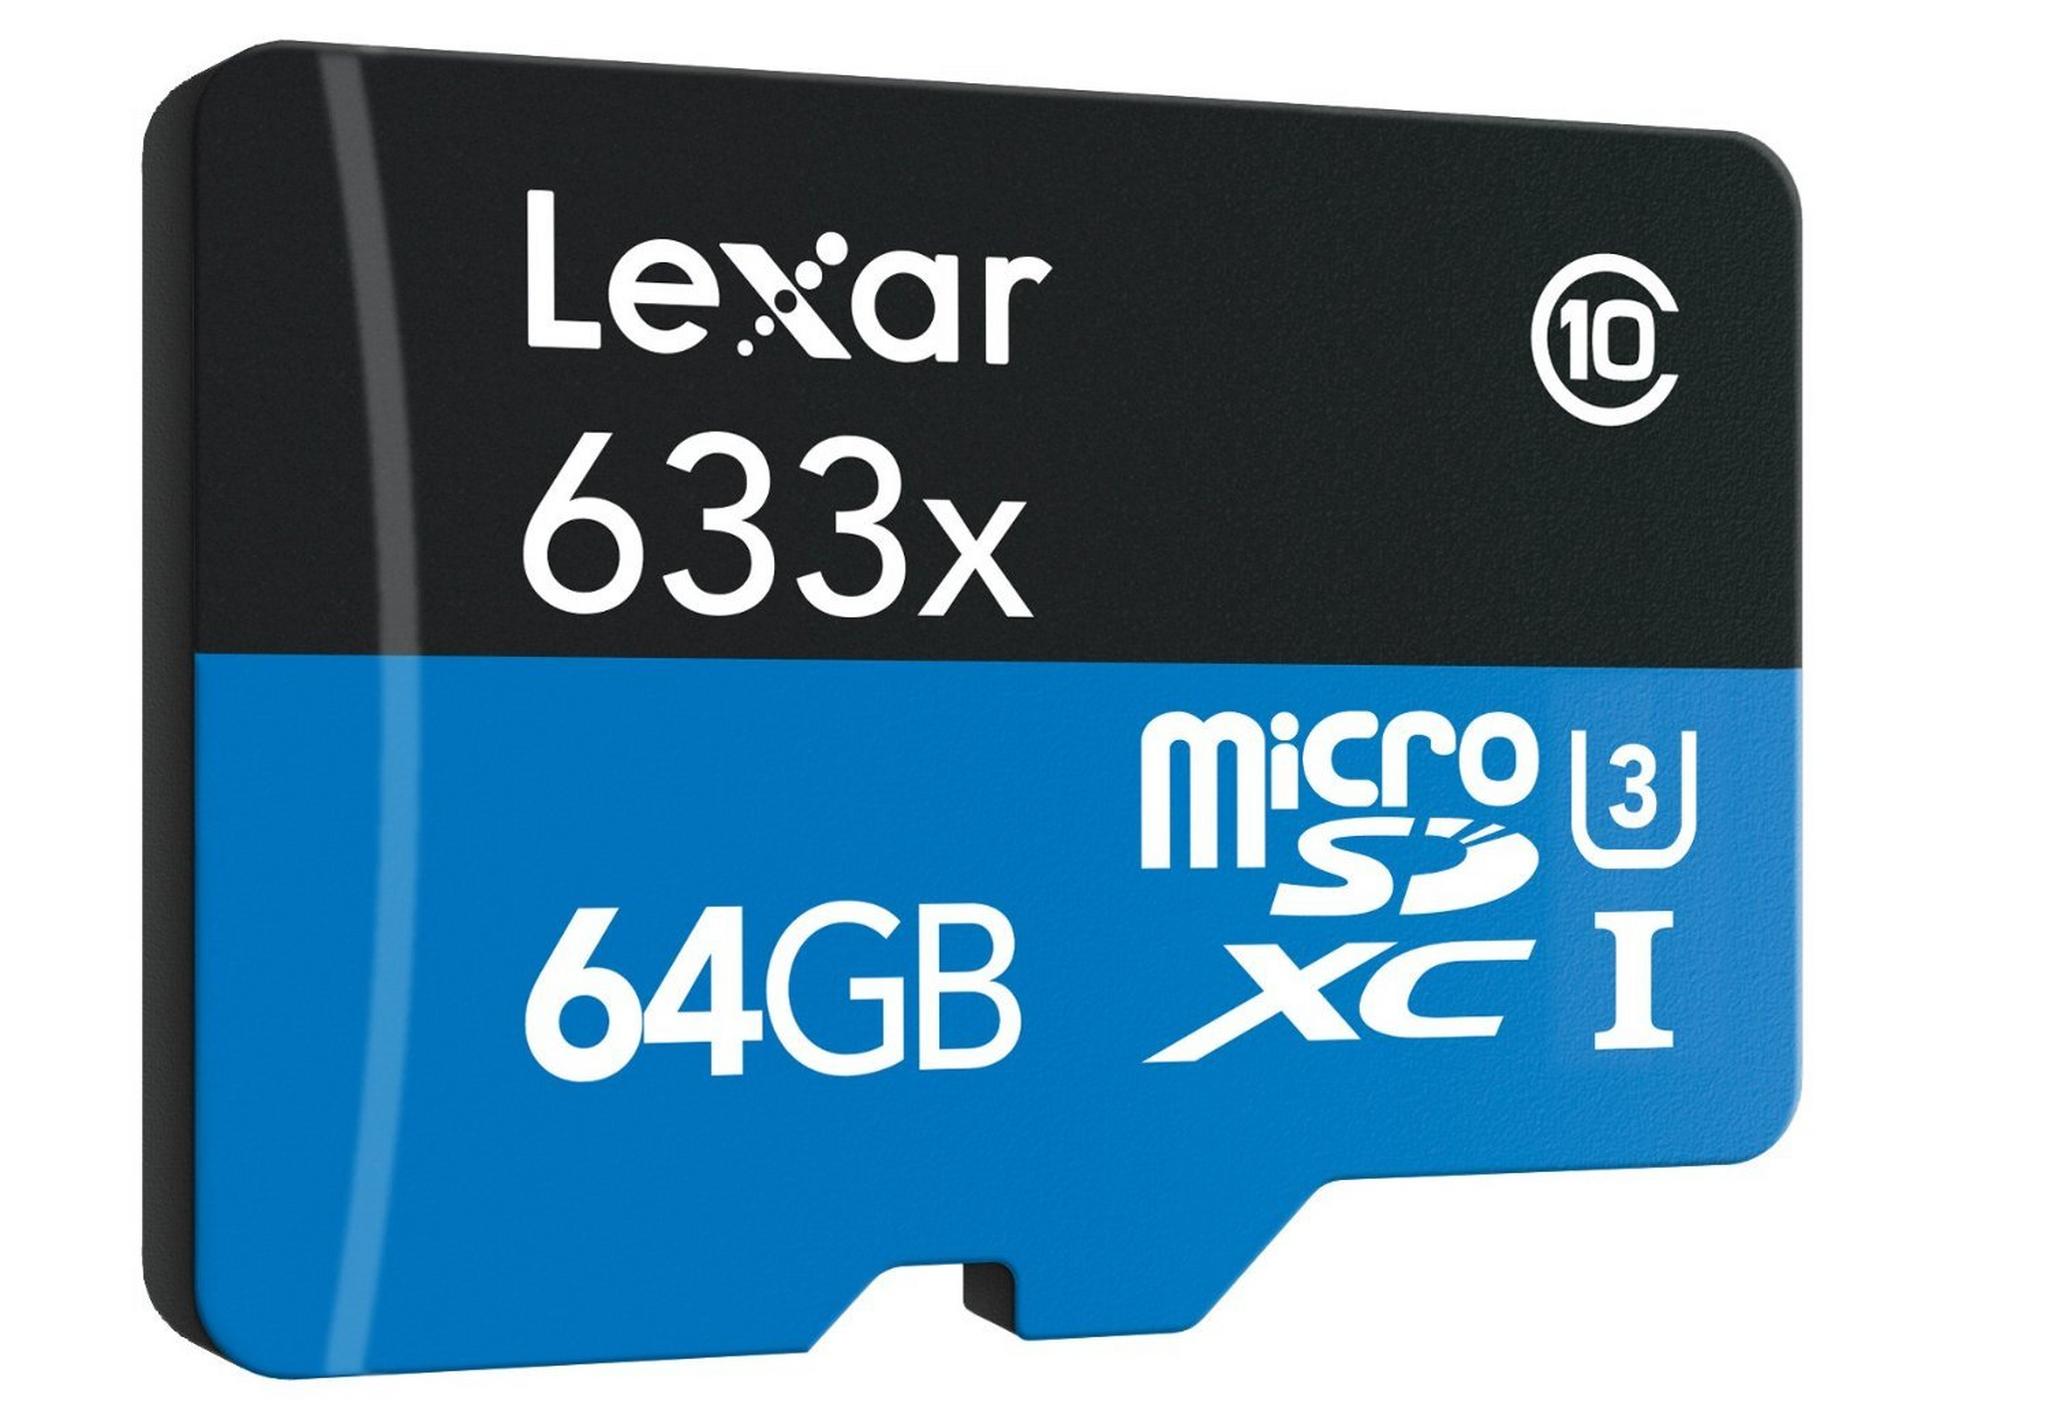 Lexar 64GB MicroSDXC UHS-I Class 10 Memory Card